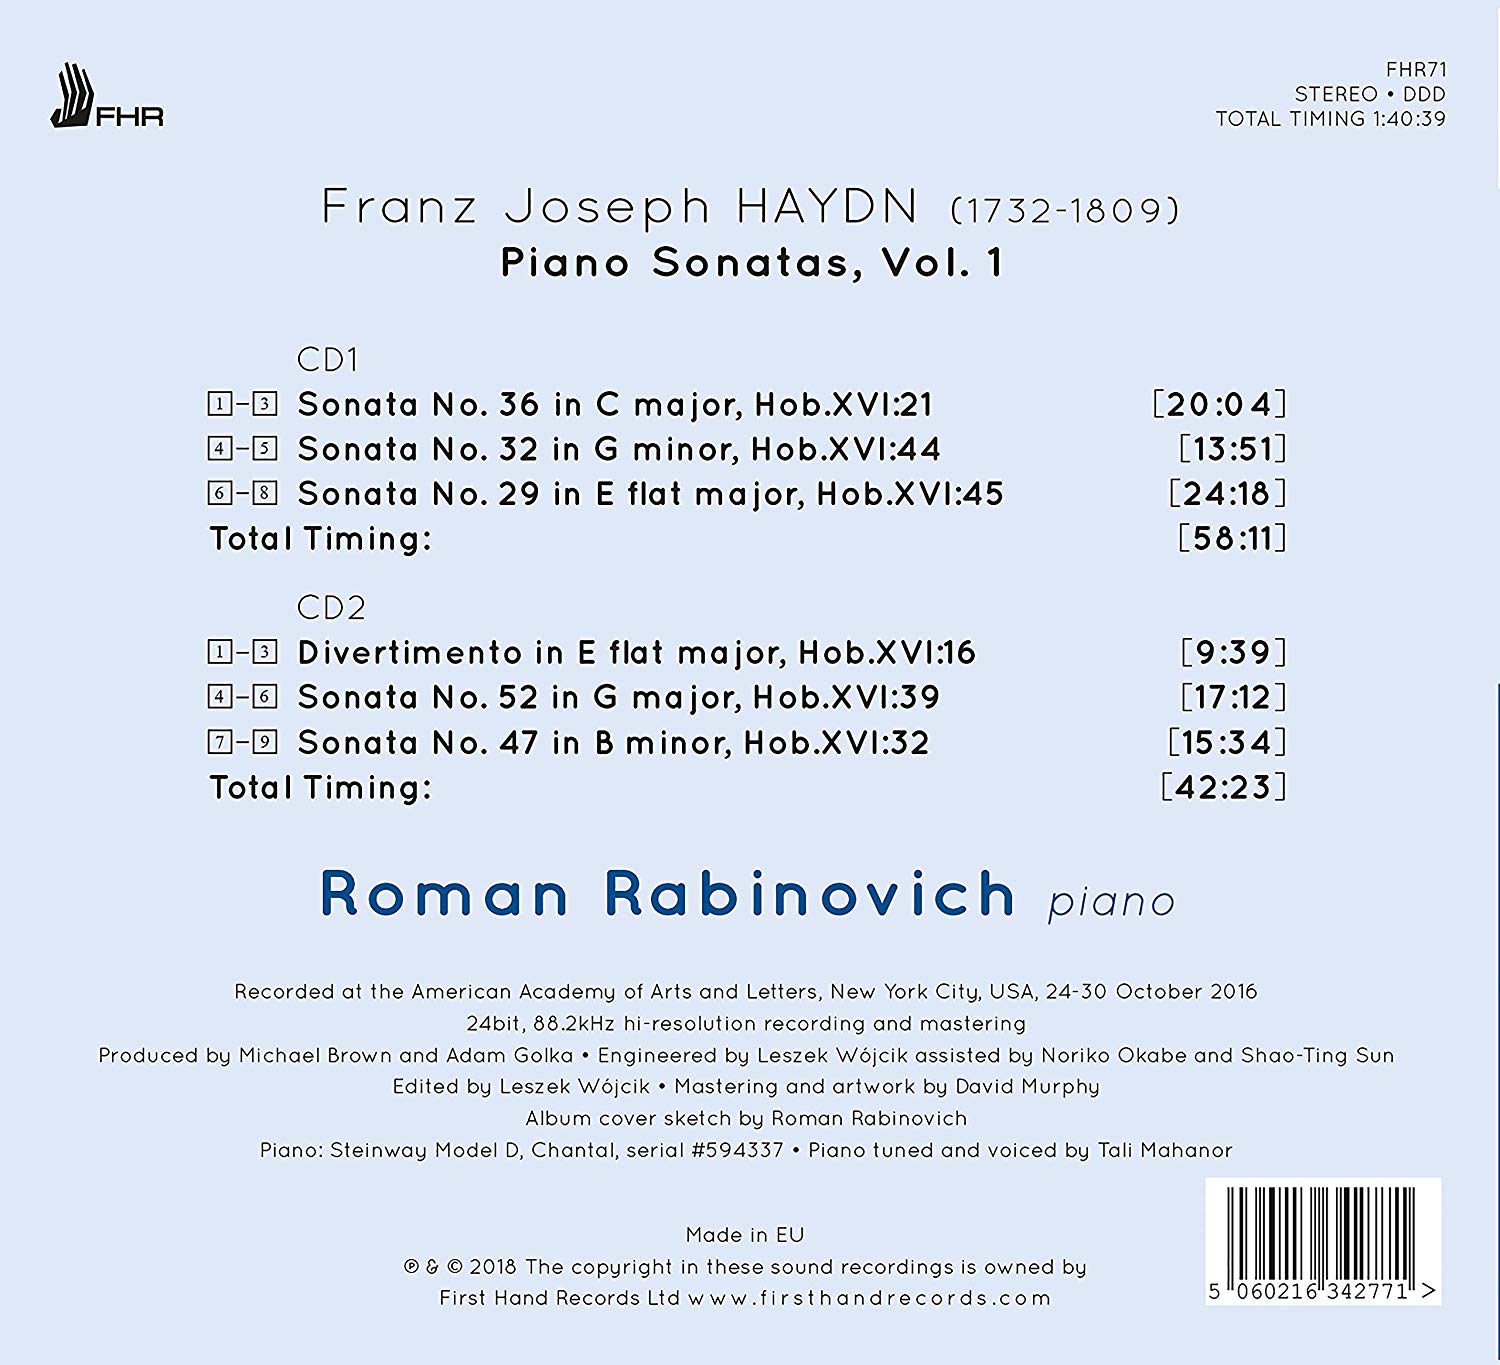 Roman Rabinovich 하이든: 피아노 소나타 1집 - 29, 32, 36, 47, 52번